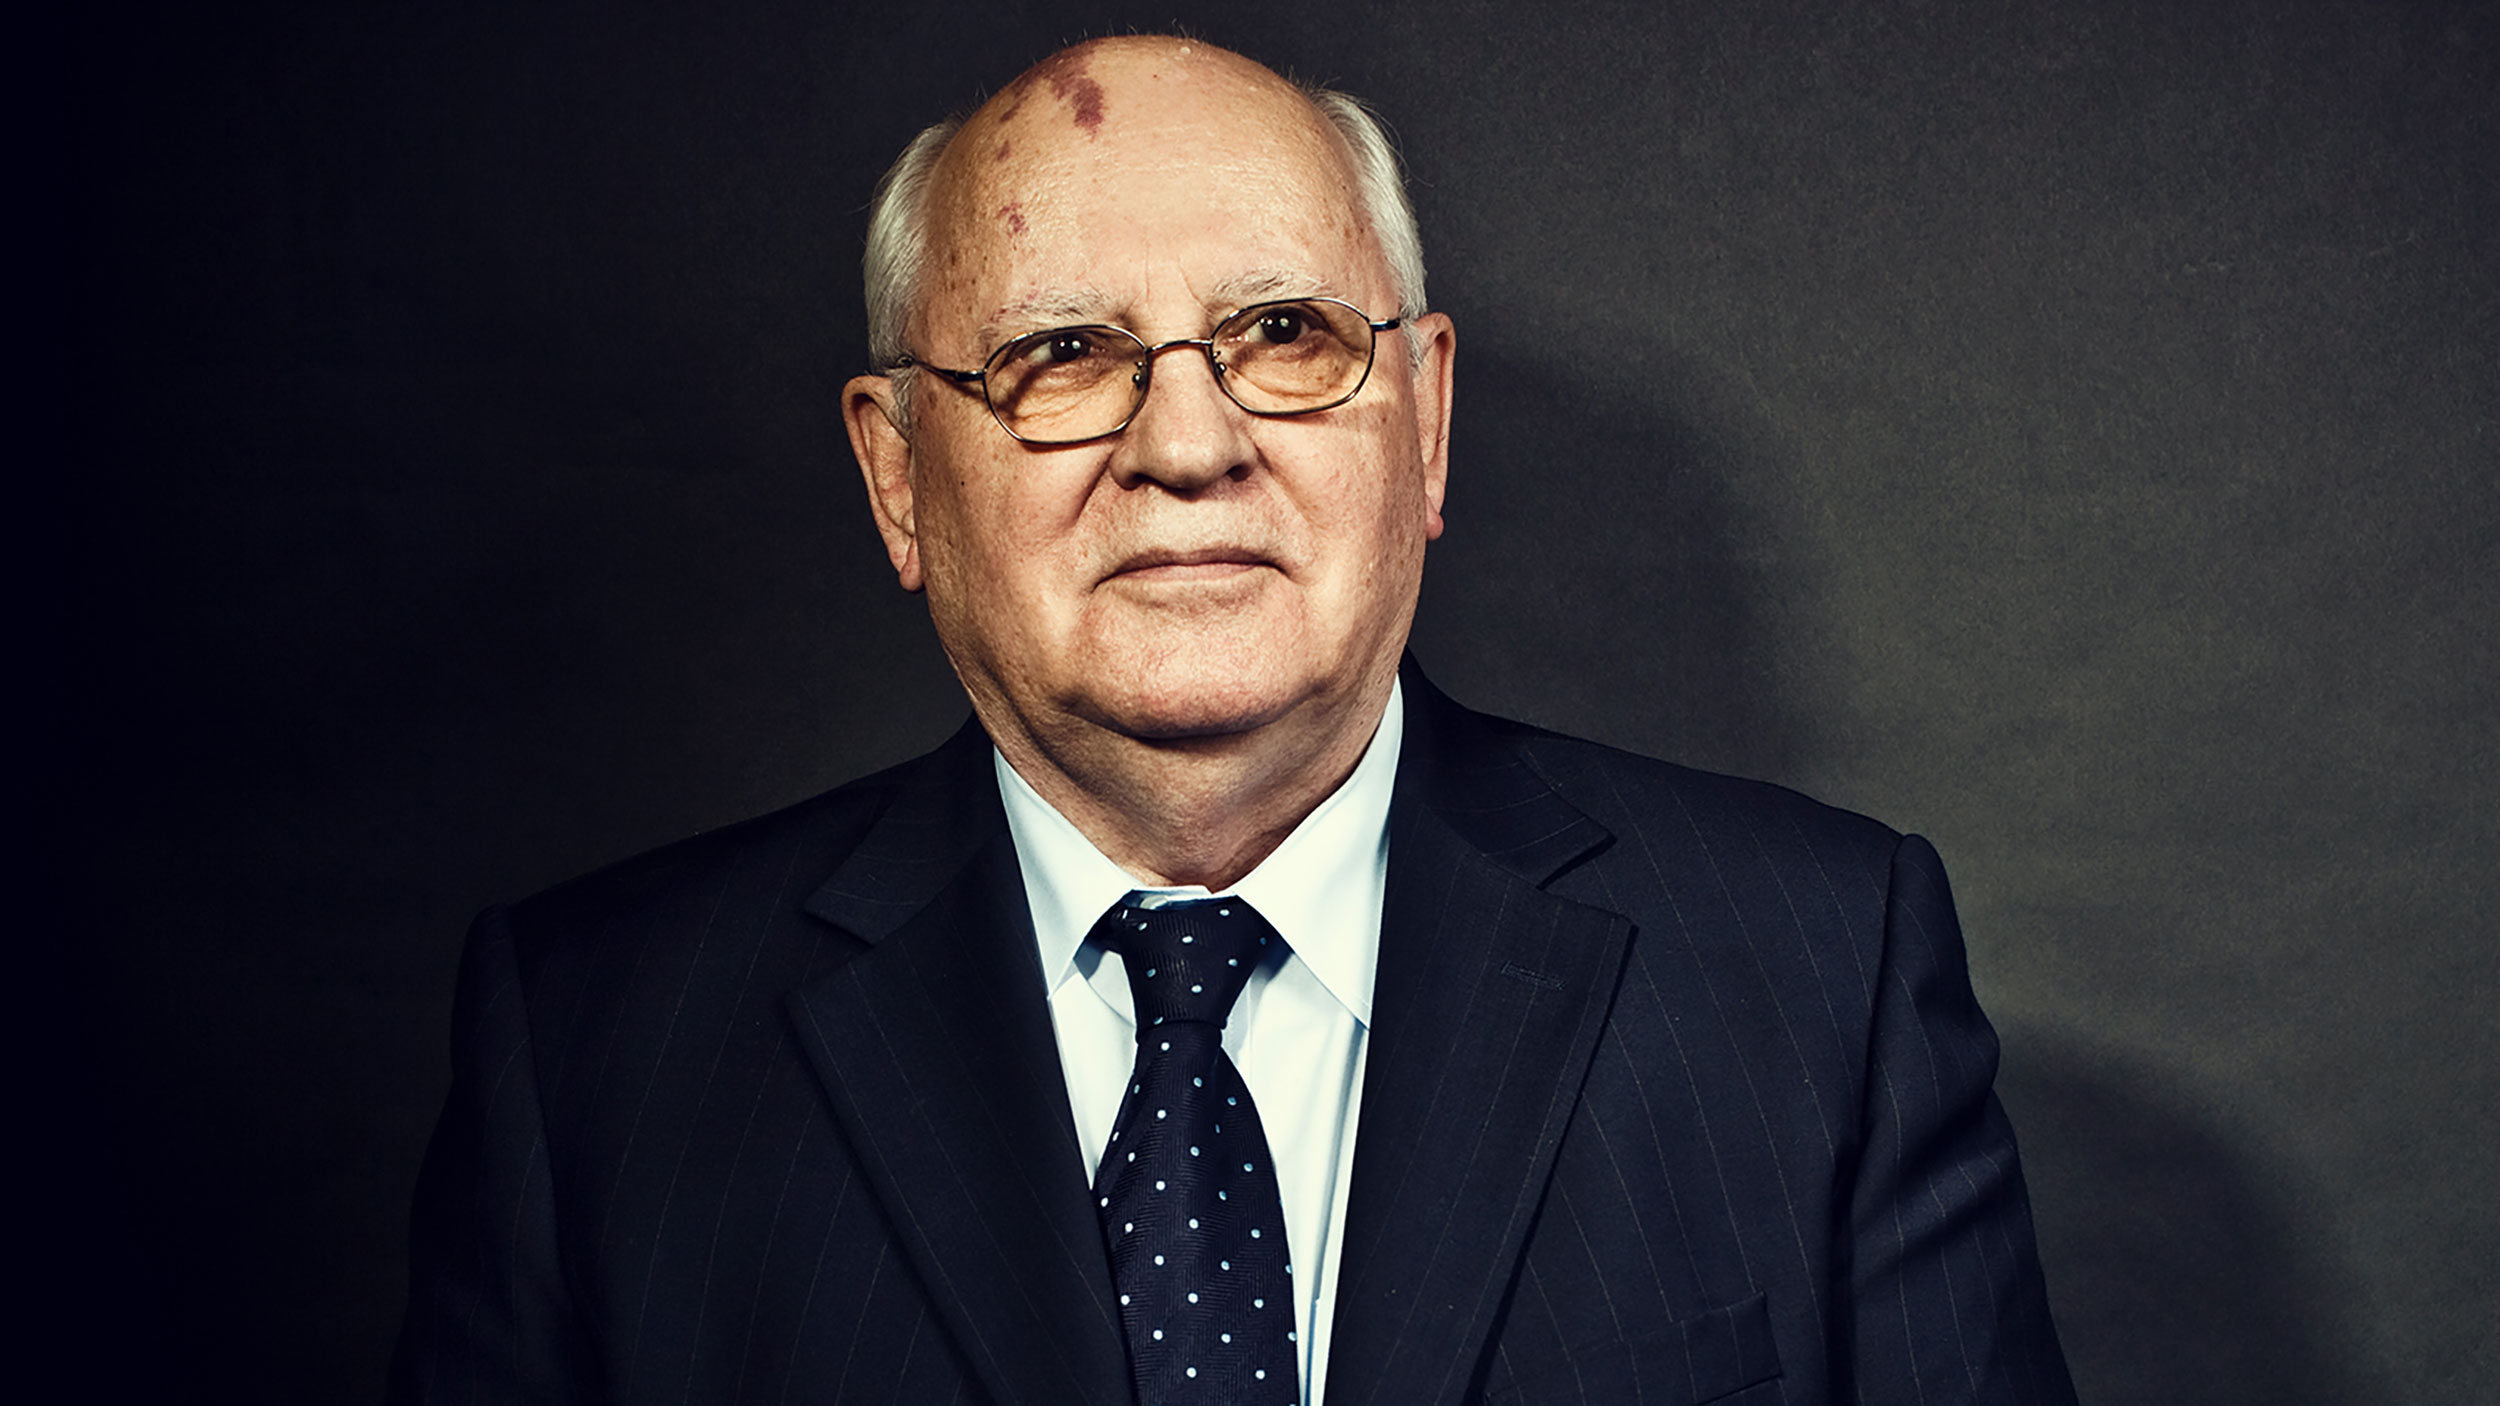 Former Soviet Leader Mikhail Gorbachev in Washington, D.C. on March 19, 2009.